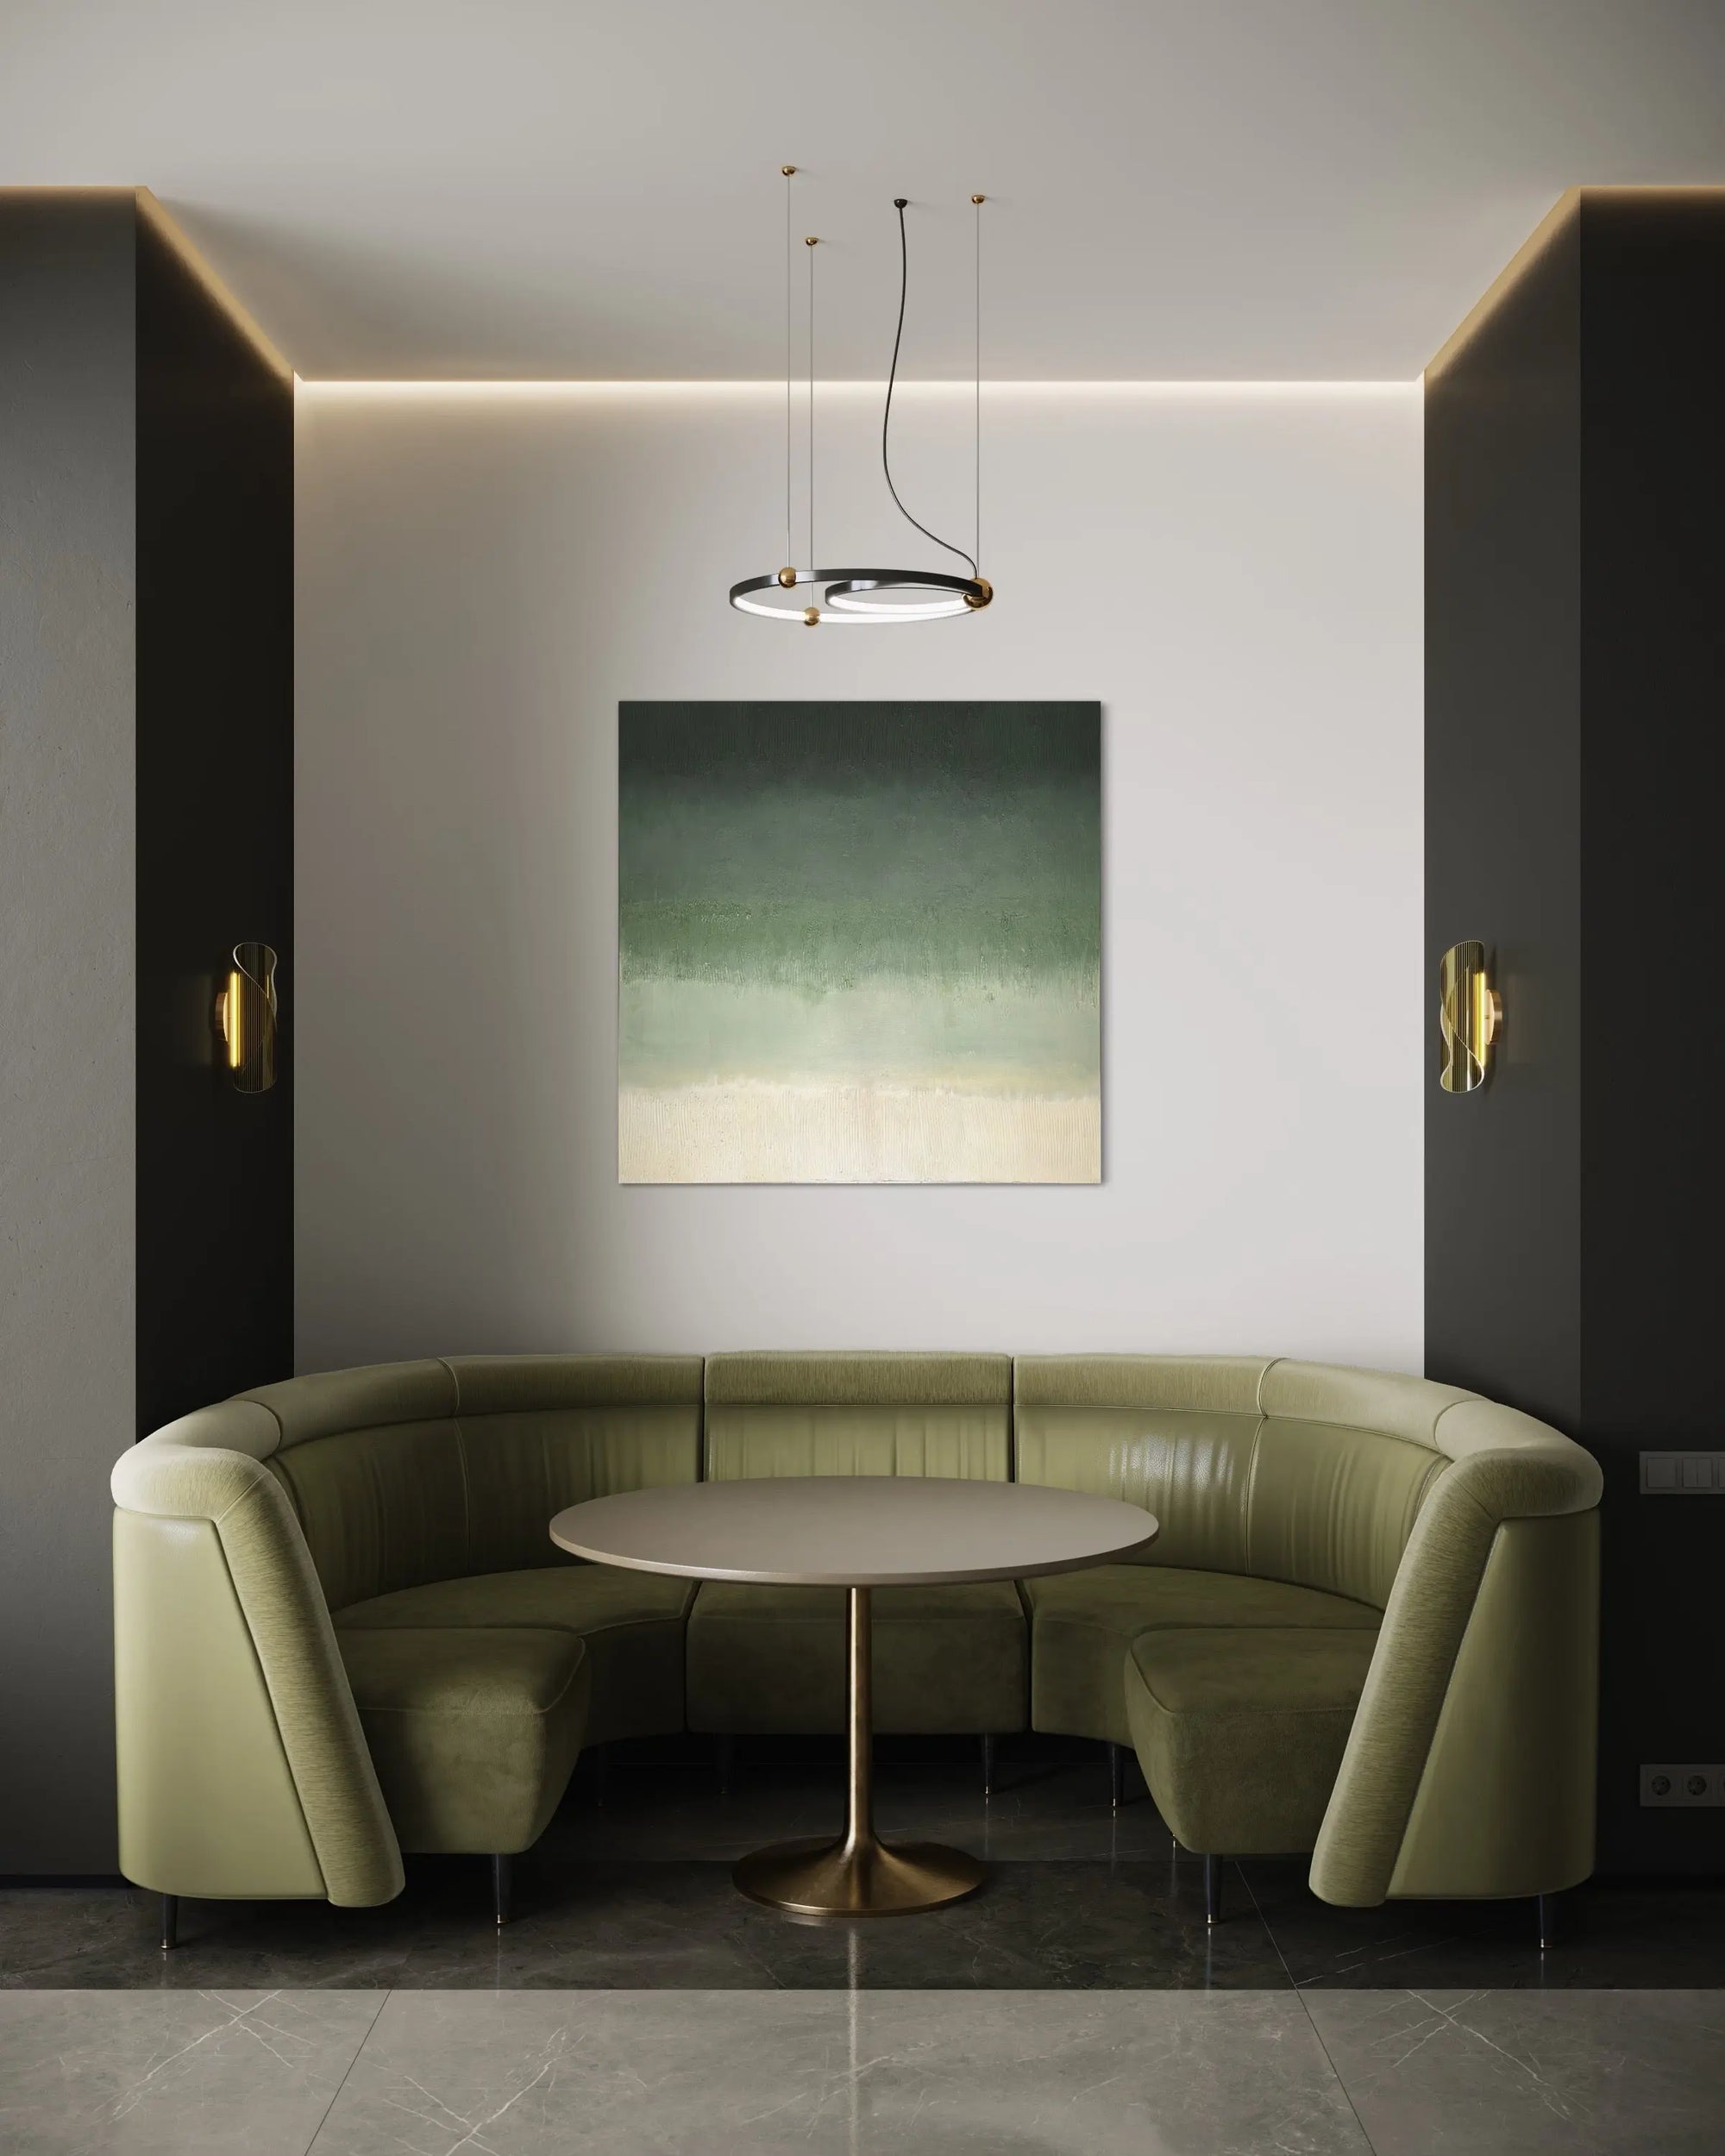 Abstract Green Ombre - Modern Art Painting - Pop Of Modern